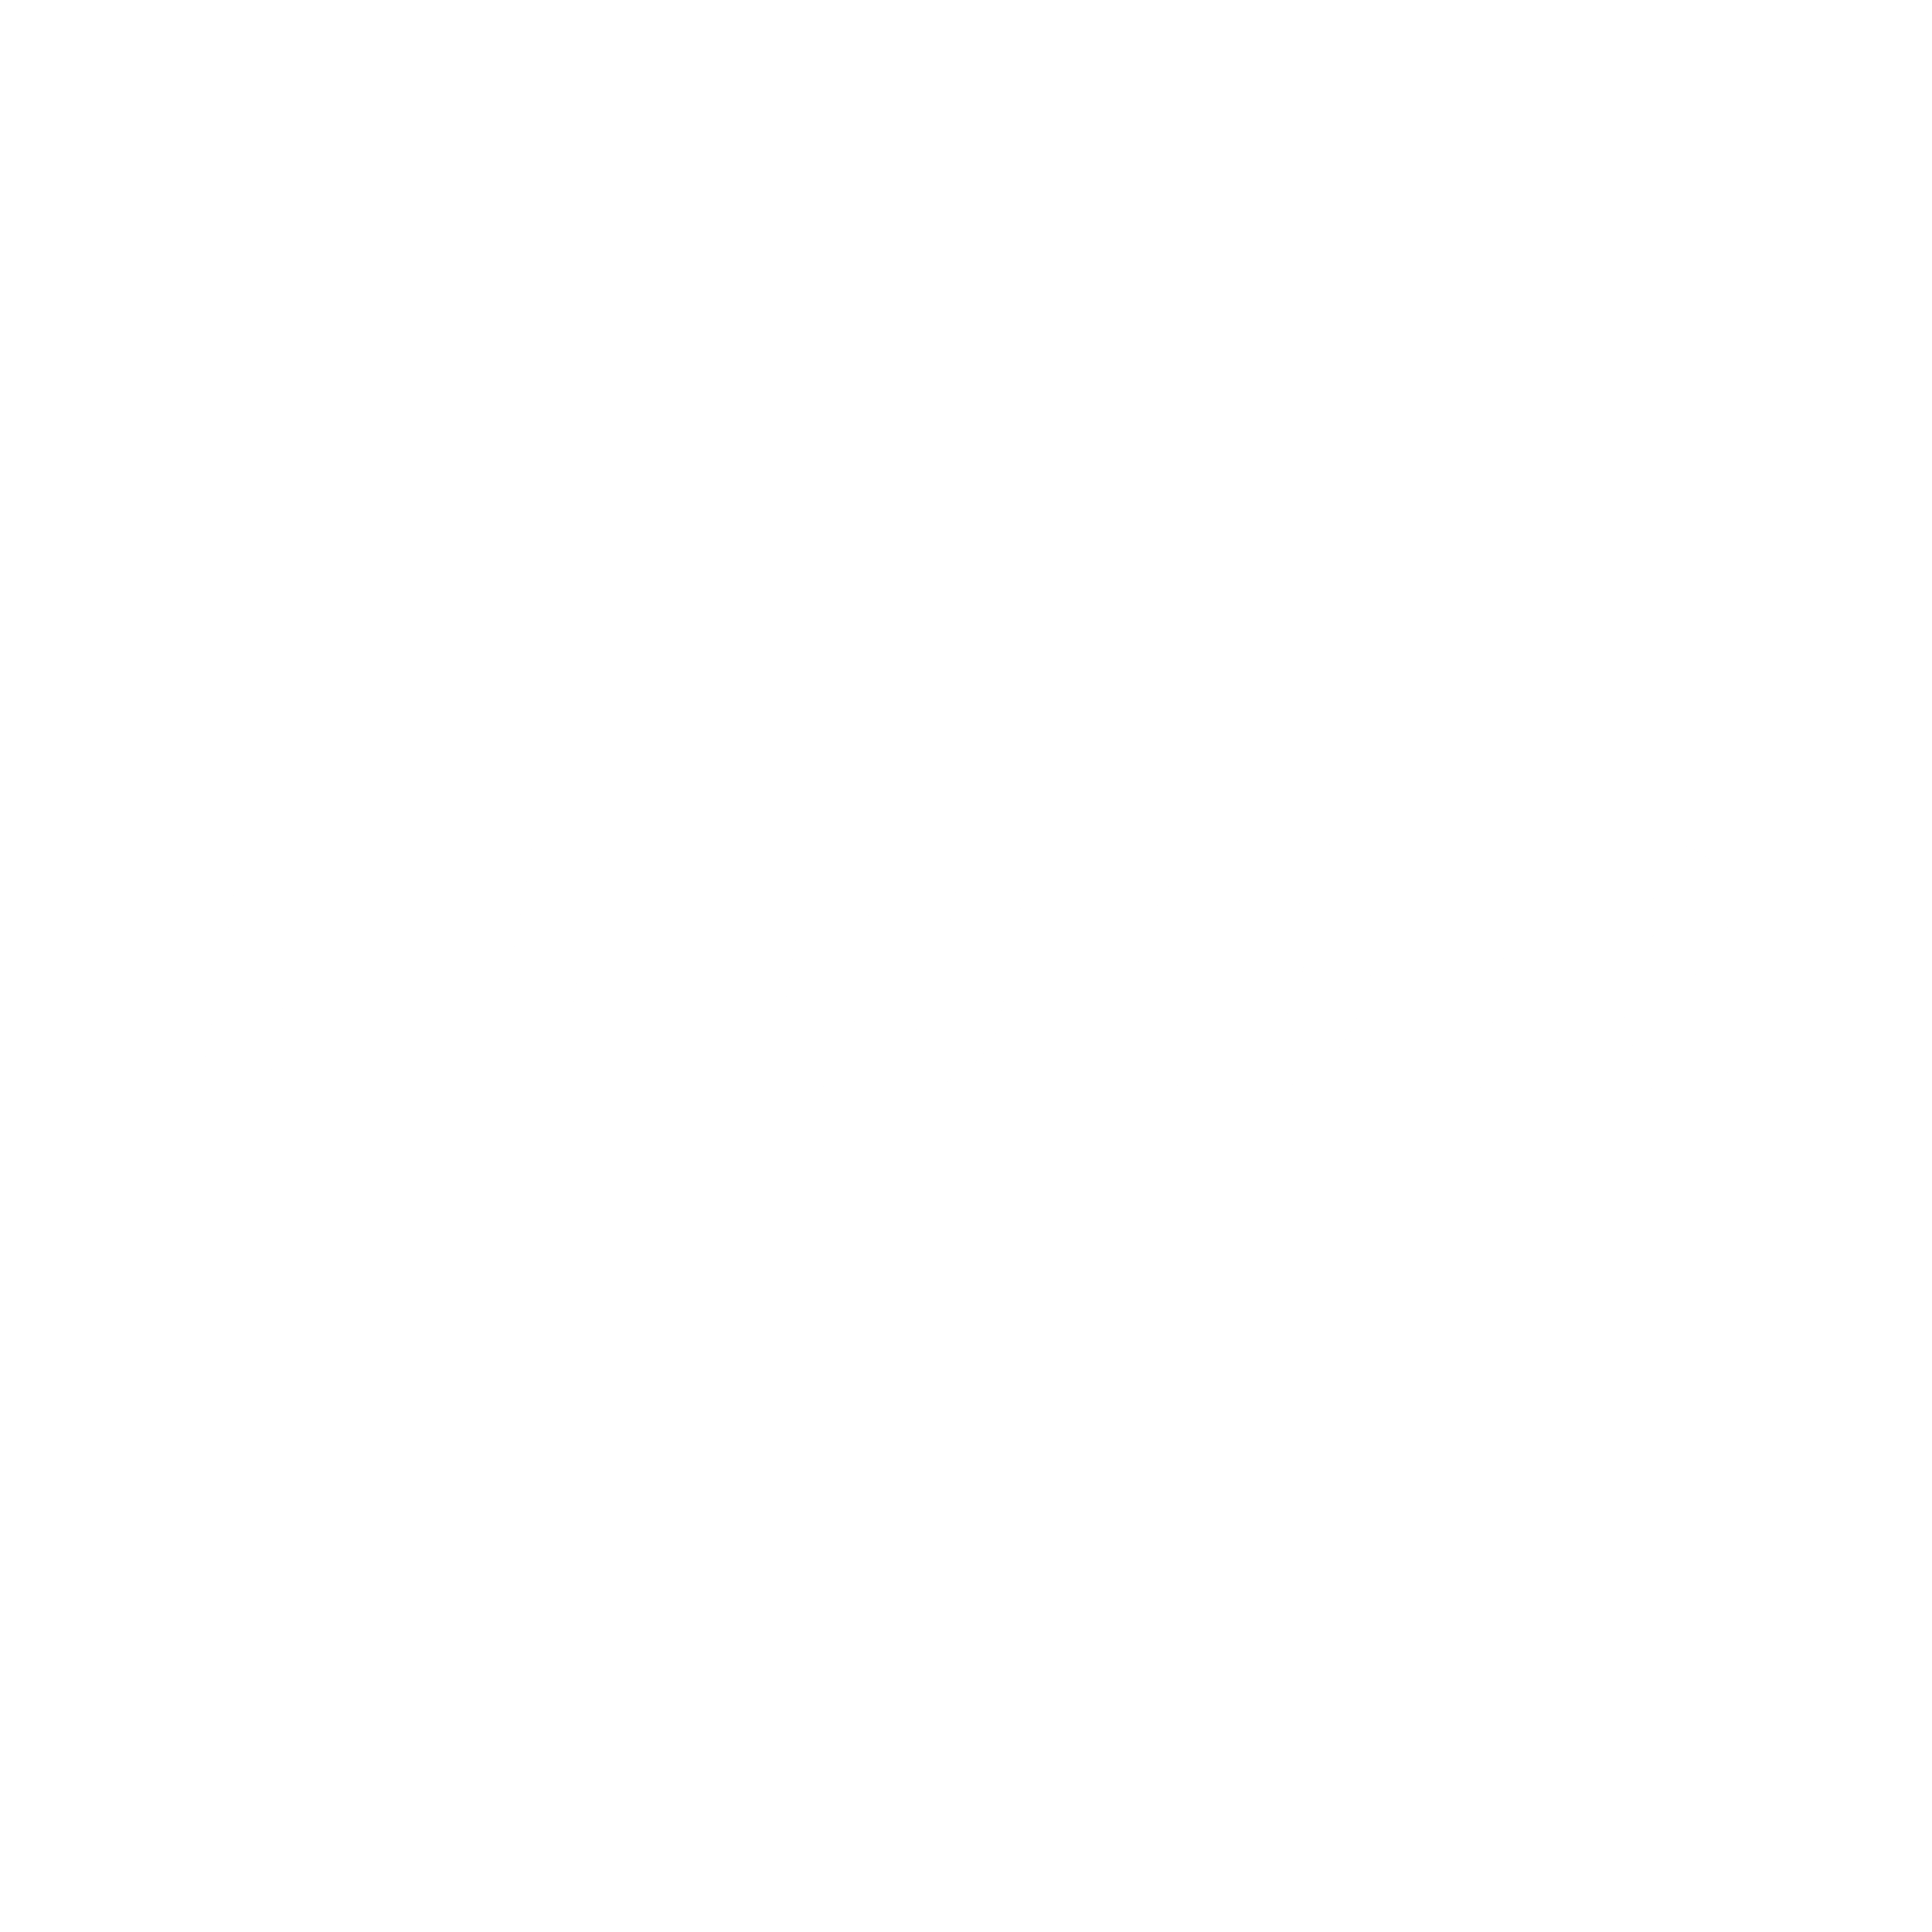 Fluor Logo - Fluor Logo PNG Transparent & SVG Vector - Freebie Supply